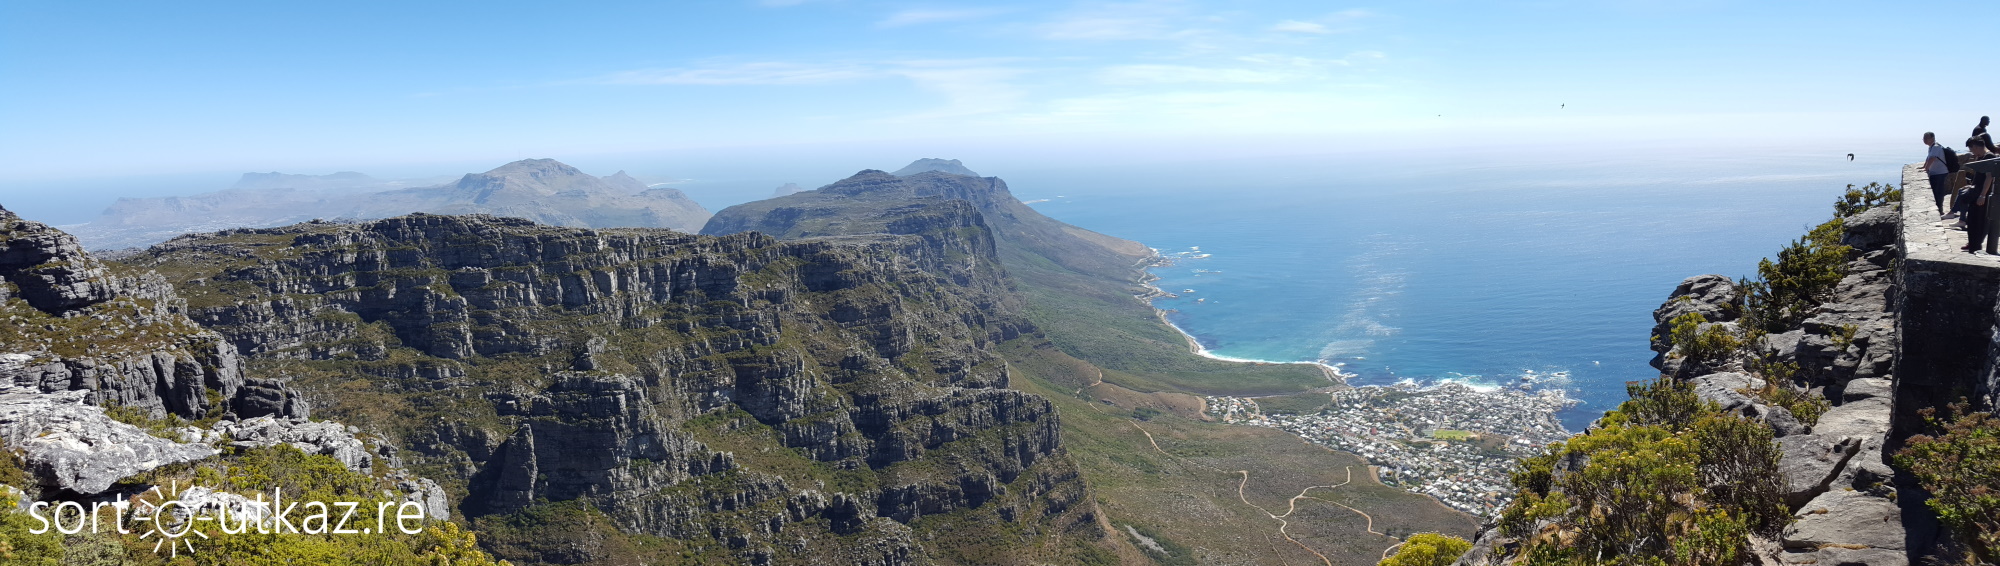 Table Mountain - Image de mise en avant